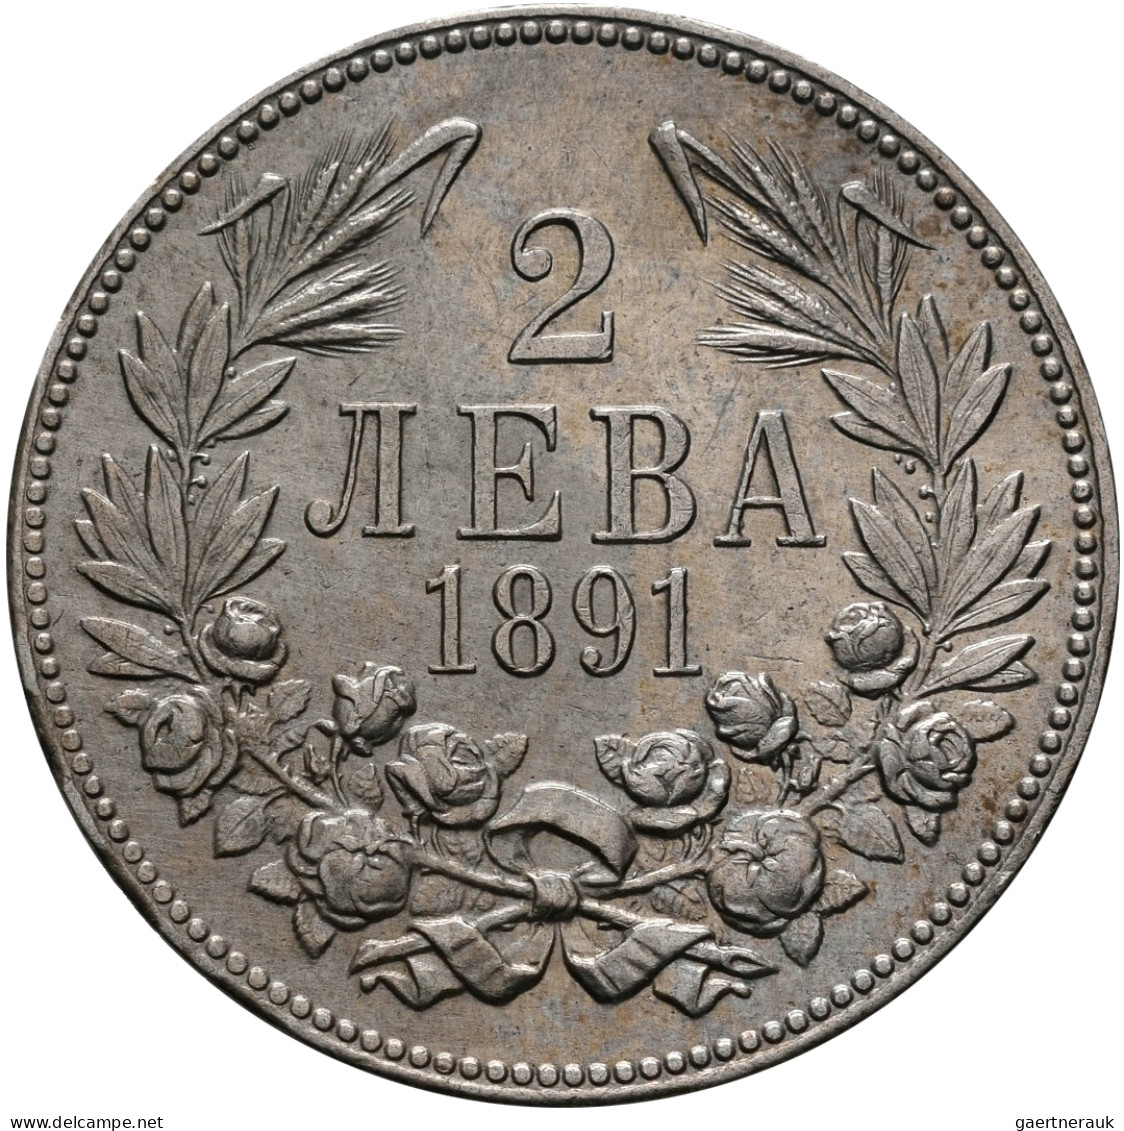 Bulgarien: Ferdinand I. 1887-1908: 2 Leva 1891, KM# 14, Vorzüglich. - Bulgarie